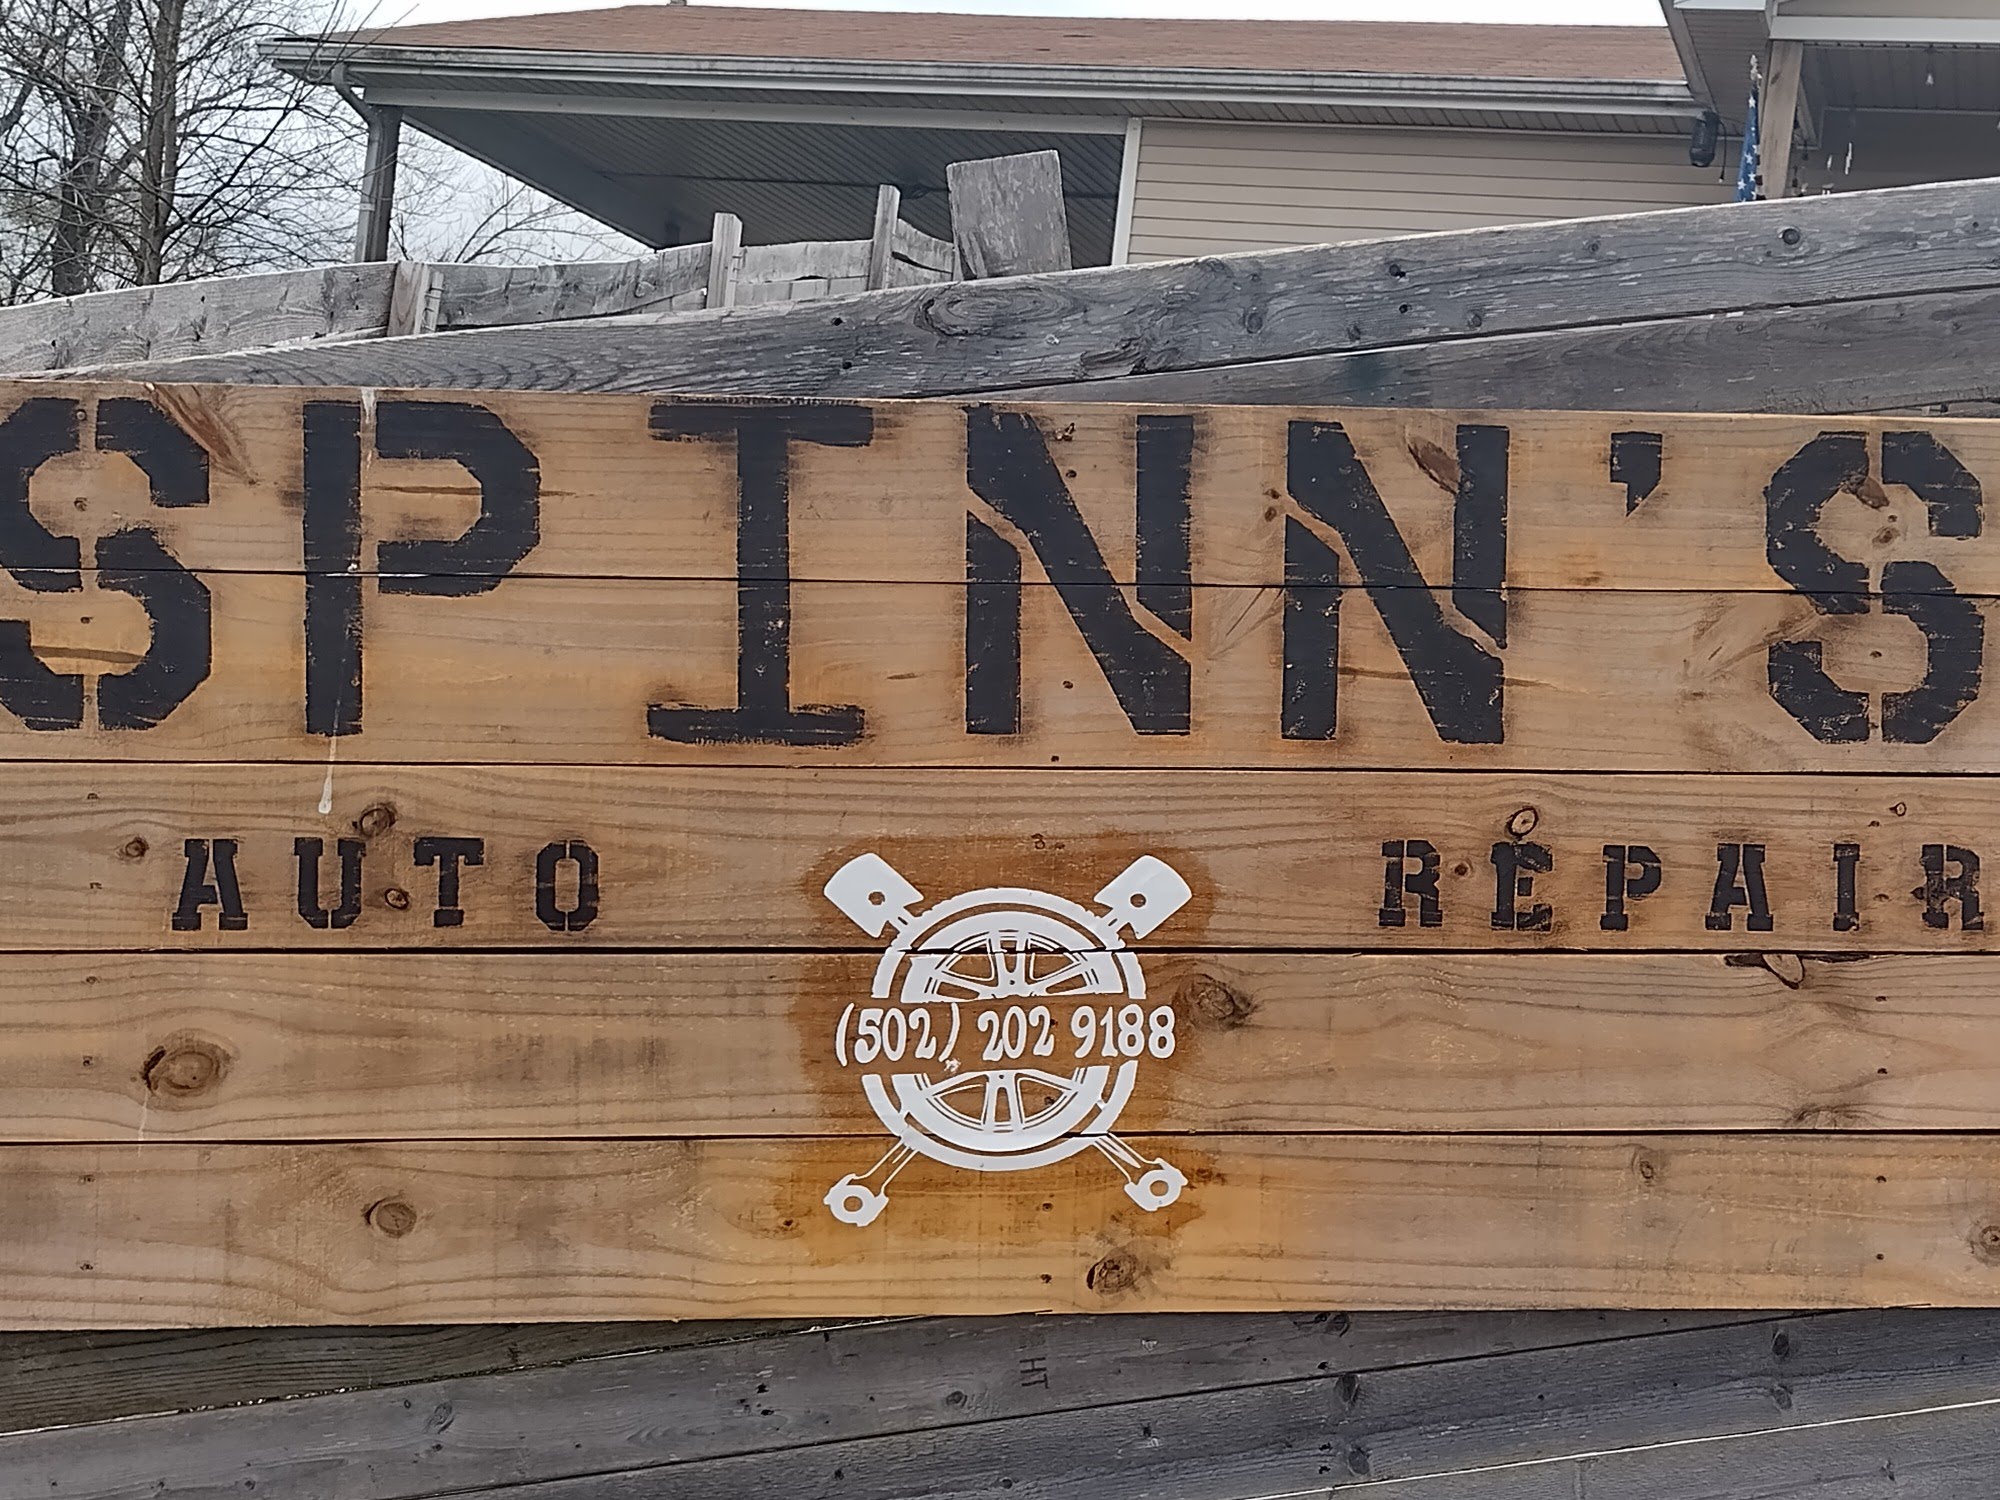 Spinn's Auto Service & Repair 8965 Wallonia Rd, Cadiz Kentucky 42211